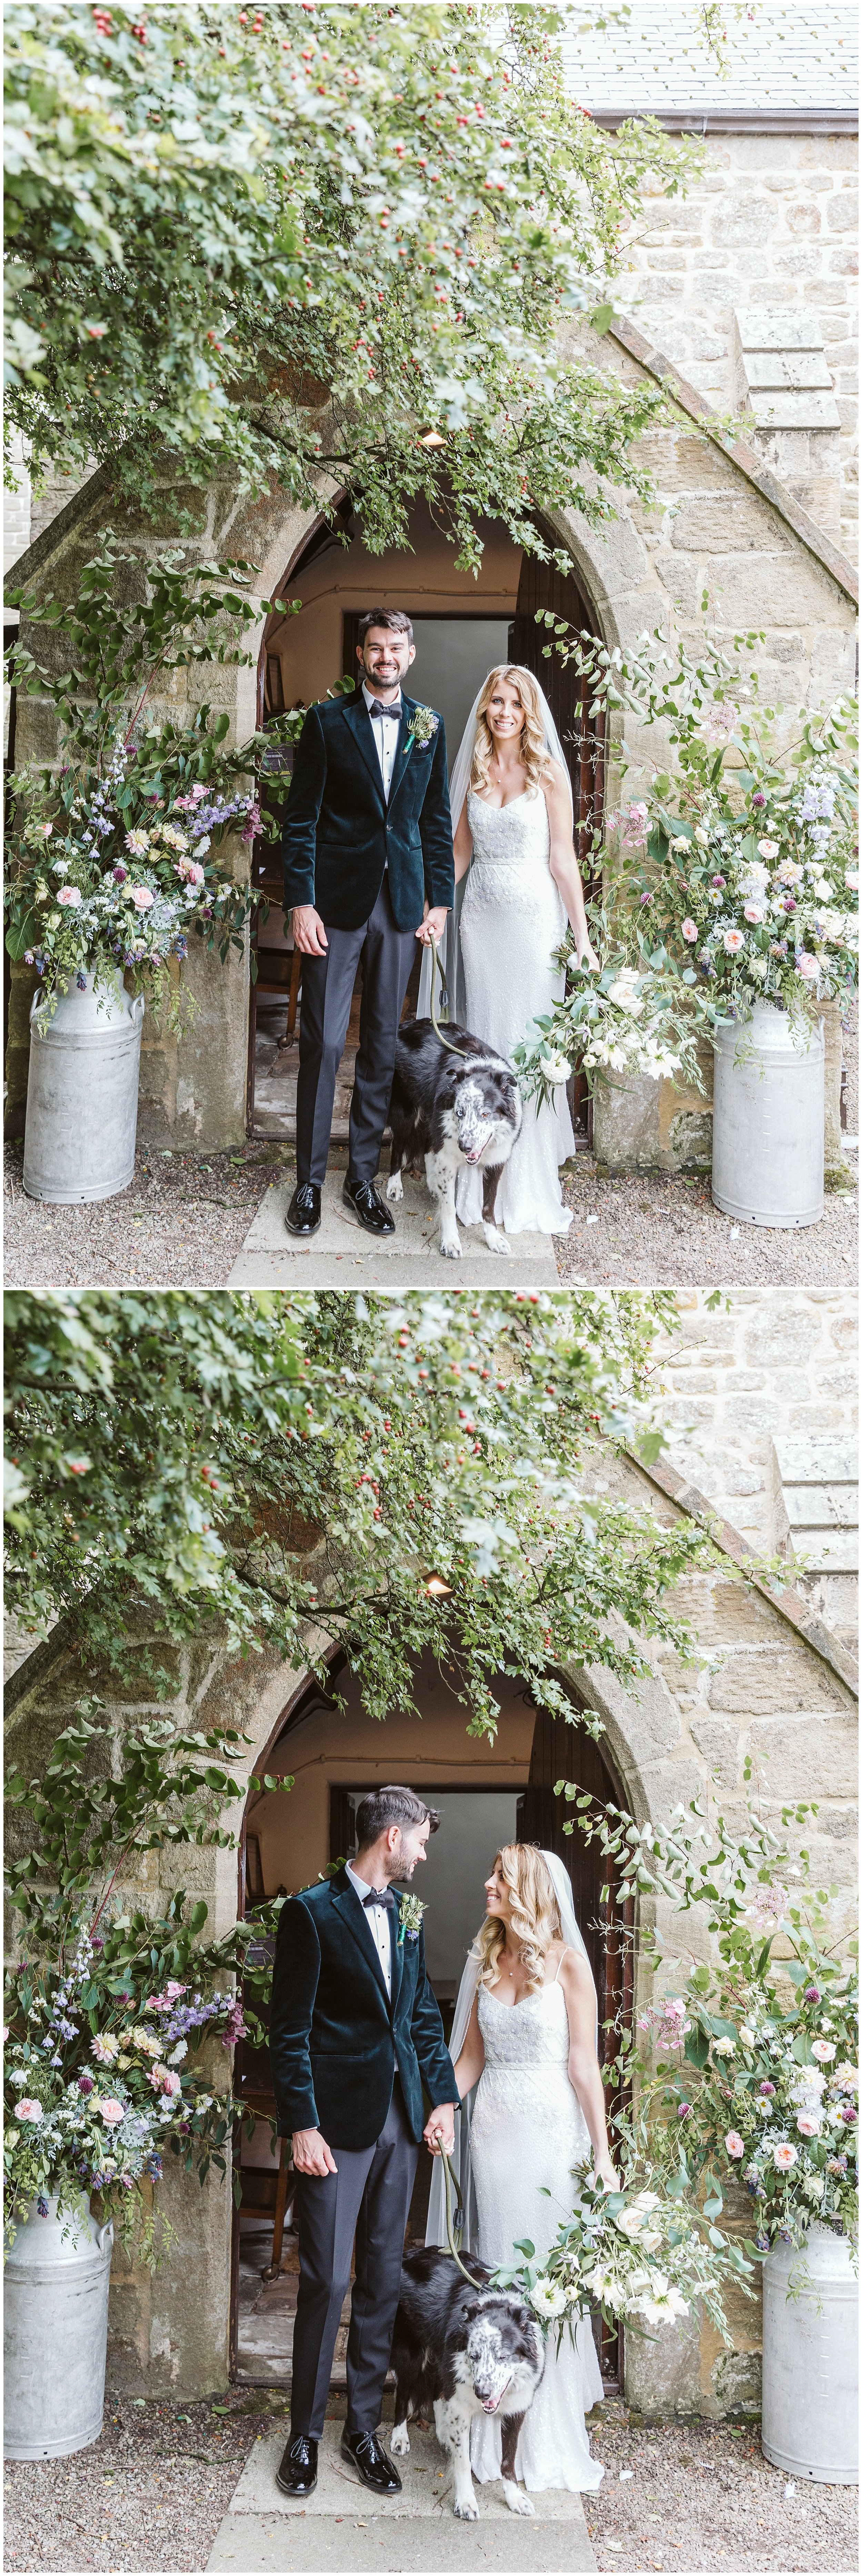 Charlotte.Eve.Photography.Northamptonshire.Oxfordshire.garden.marquee.wedding_0055.jpg